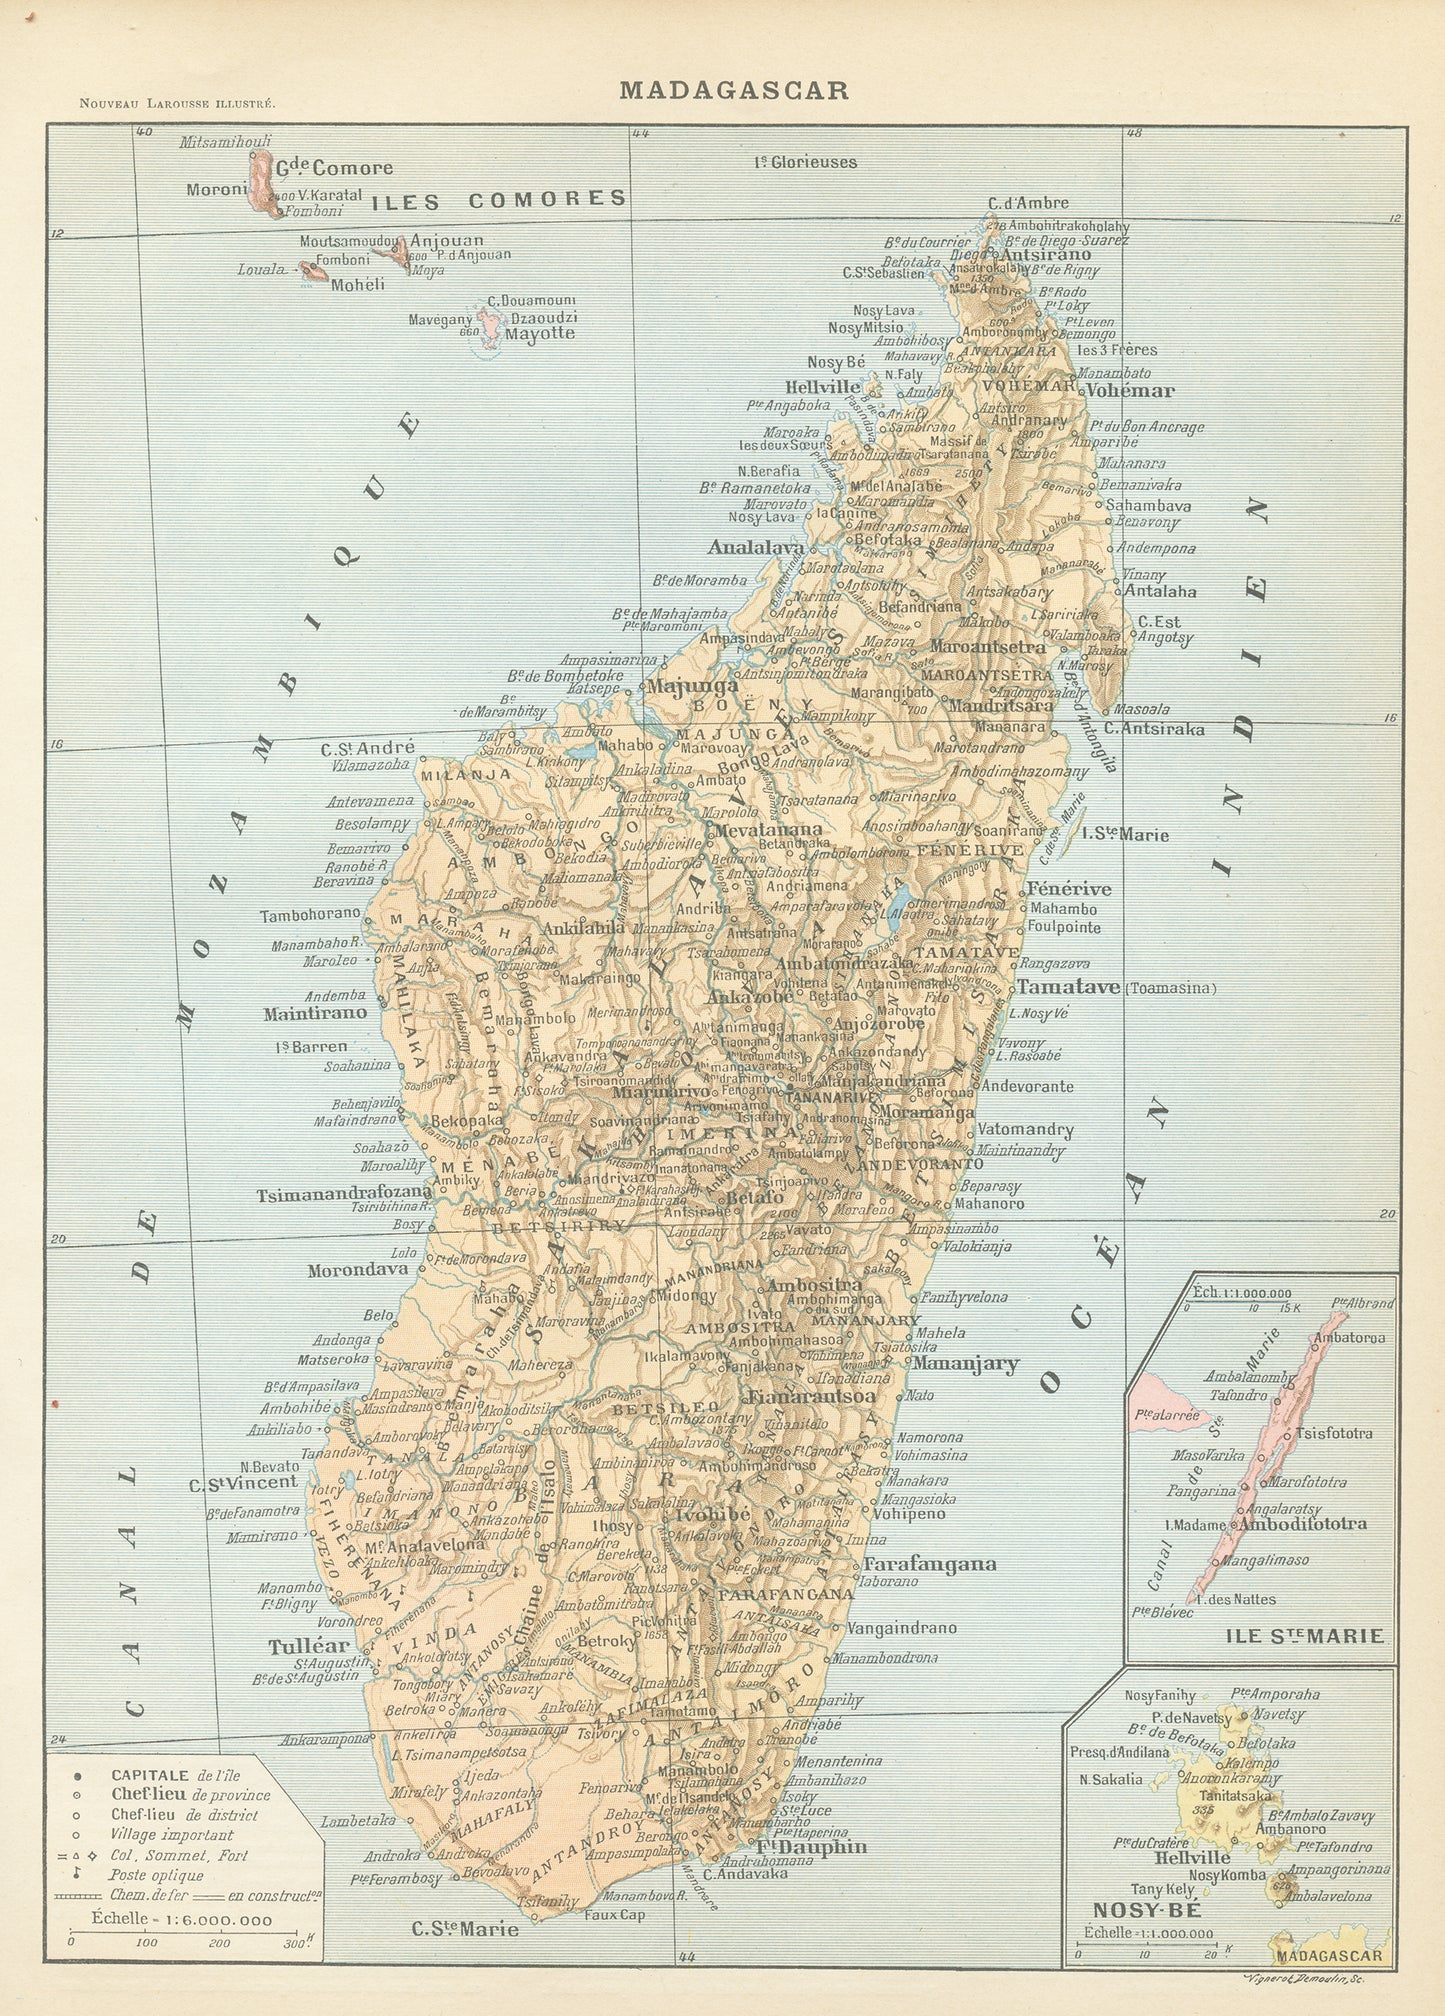 1897 Madagascar map